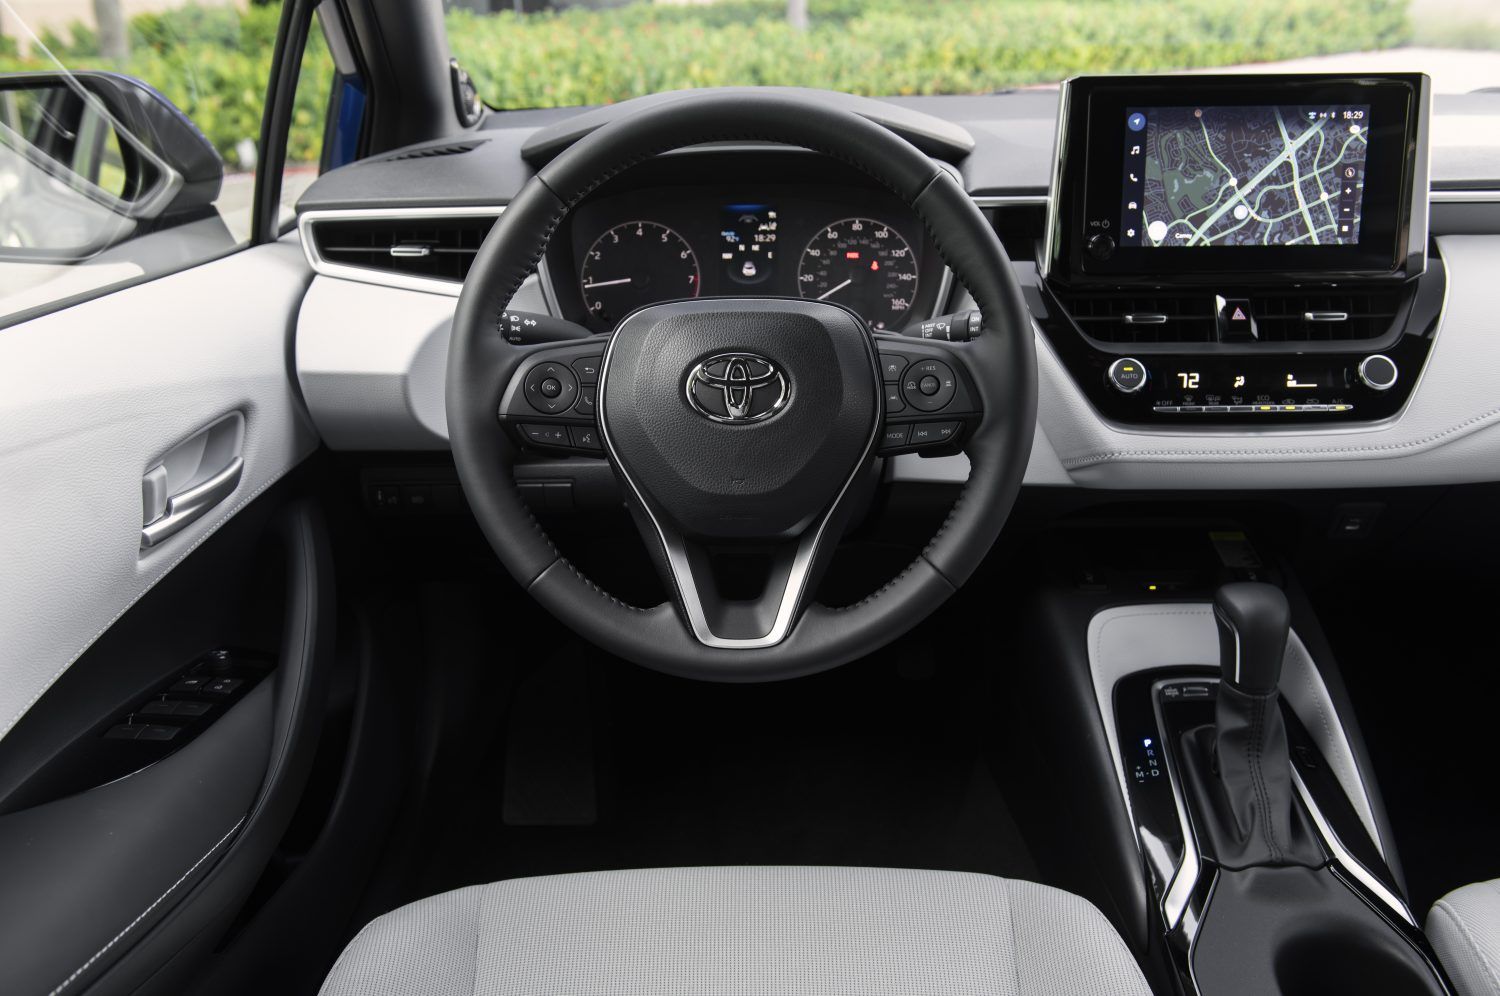 2023 Toyota Corolla Hatchback cockpit view